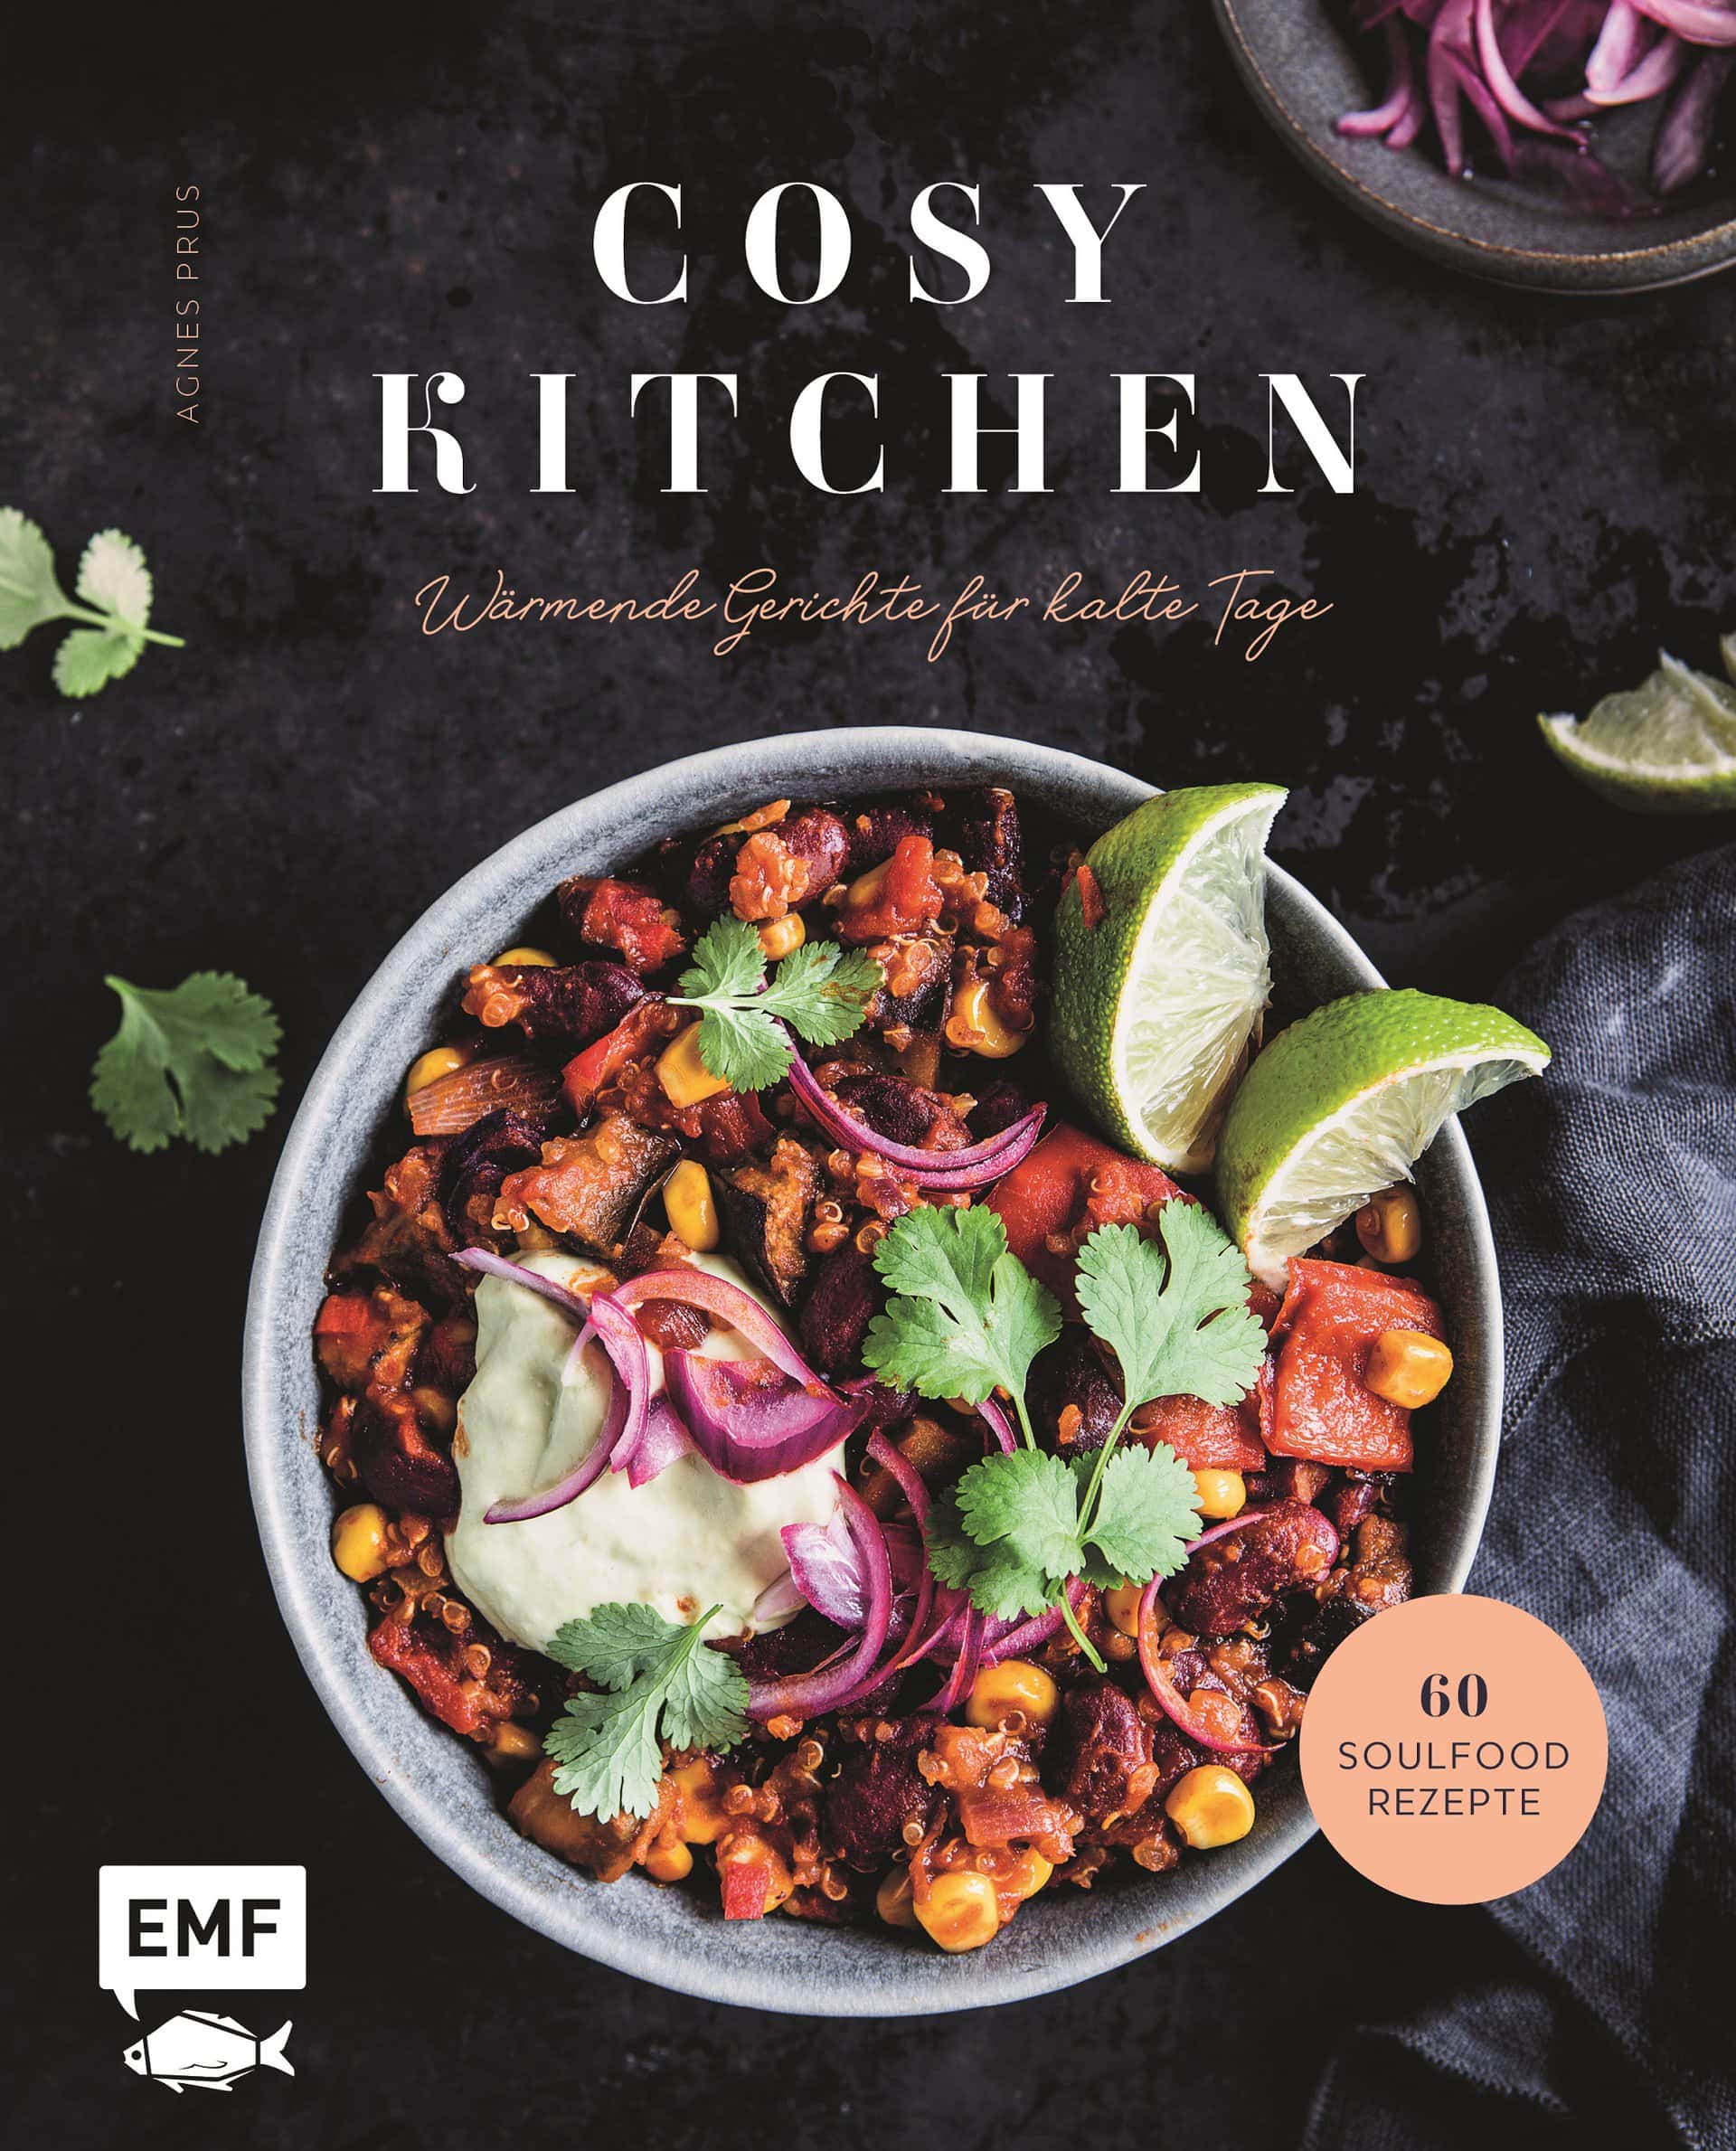 Buchcover "Cosy Kitchen"